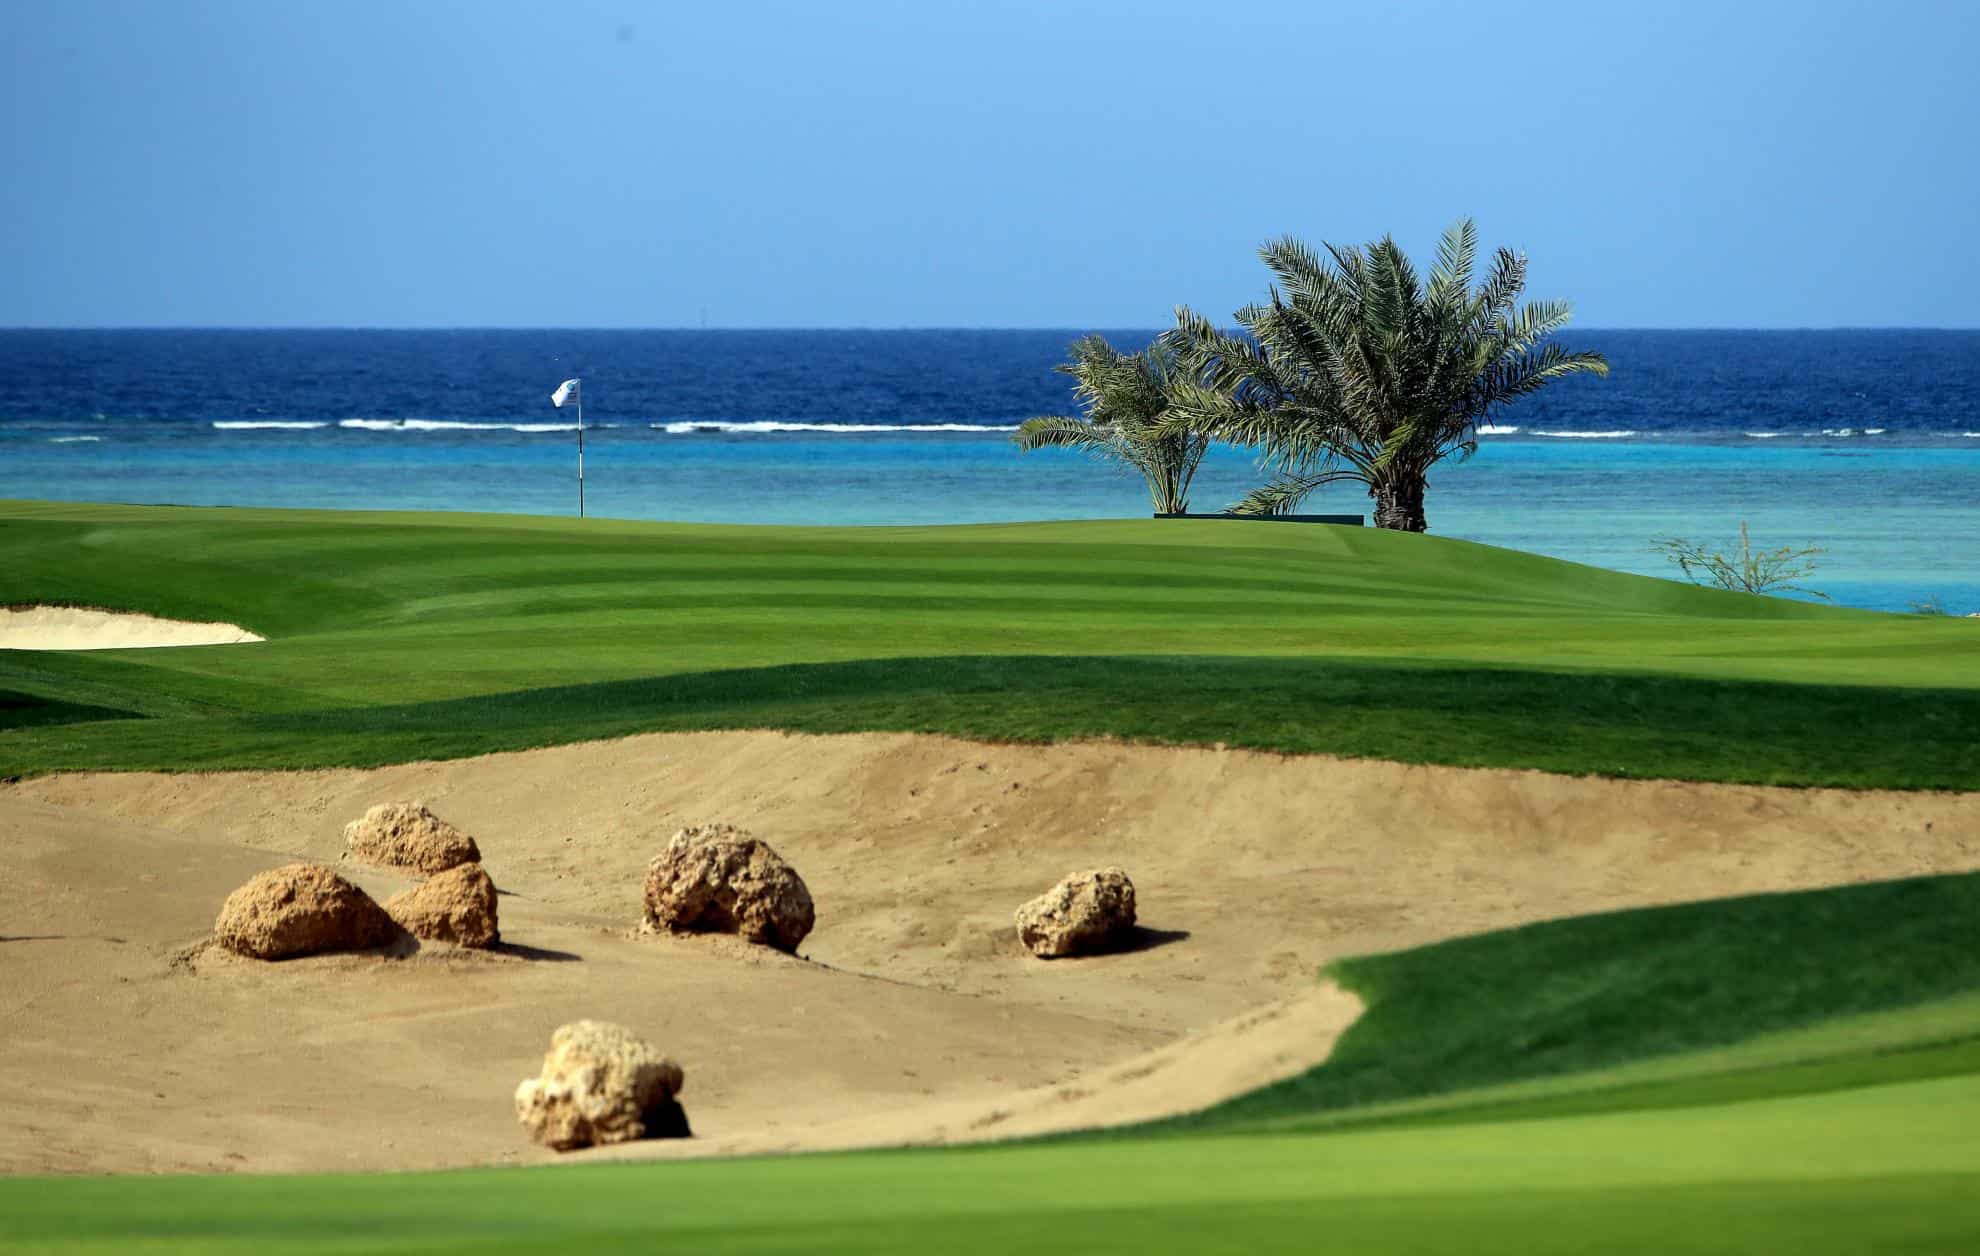 Saudi Arabia A golfing destination awakens